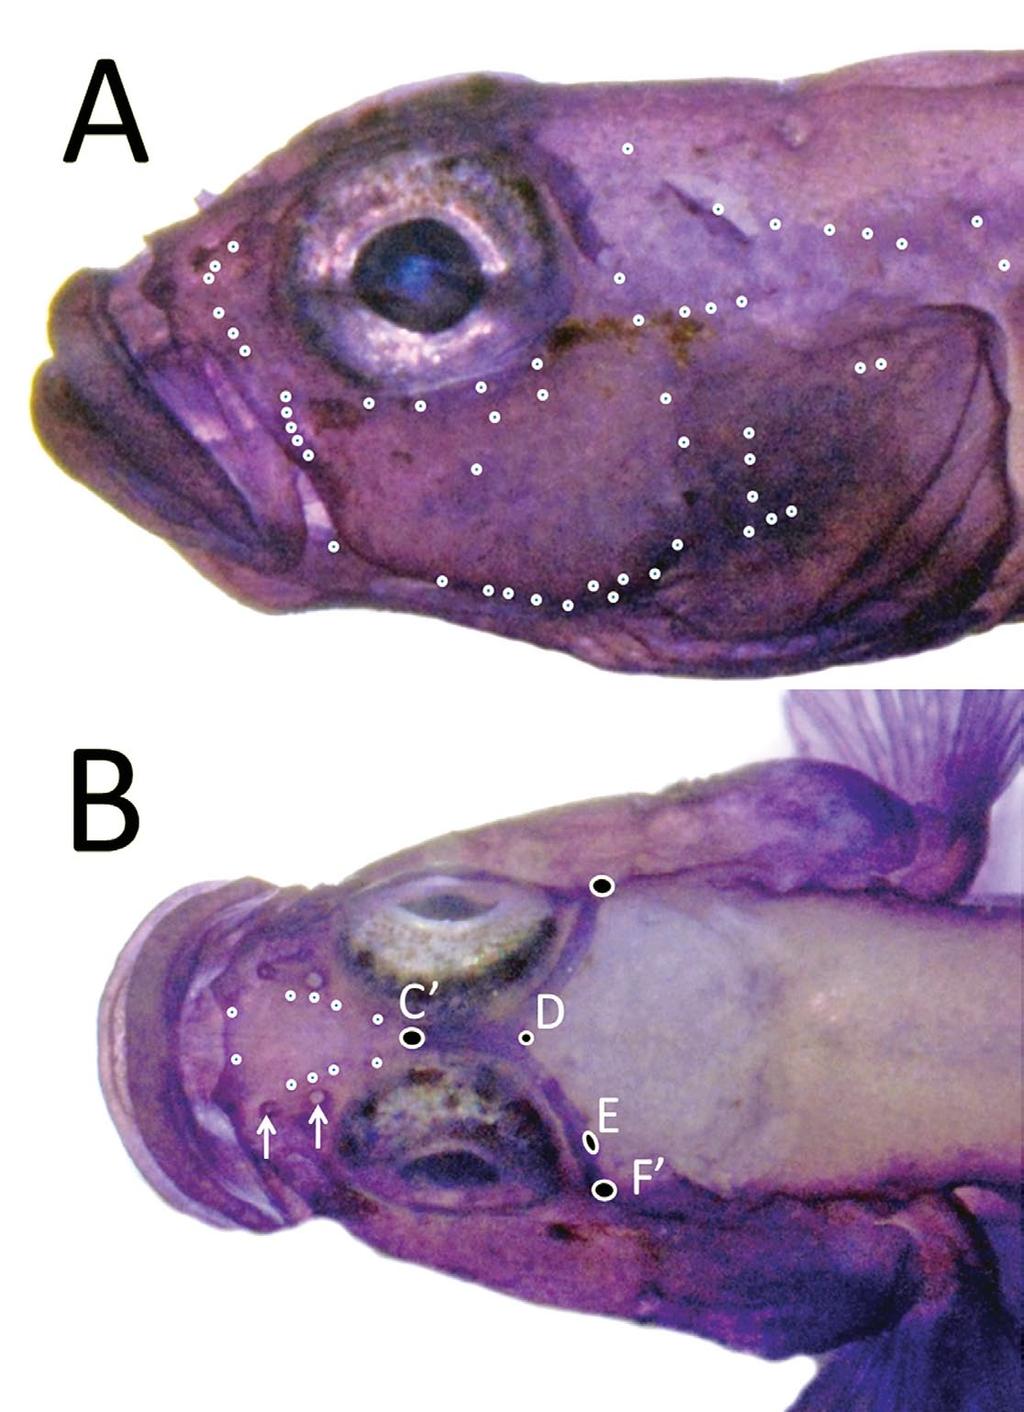 Body elongate and slender, depth at pelvic-fin origin 6.4 (6.6) in SL; depth at anal-fin origin 7.6 (7.8) in SL; body compressed, width at pectoral-fin origin 2.3 in HL; head length 3.5 (3.